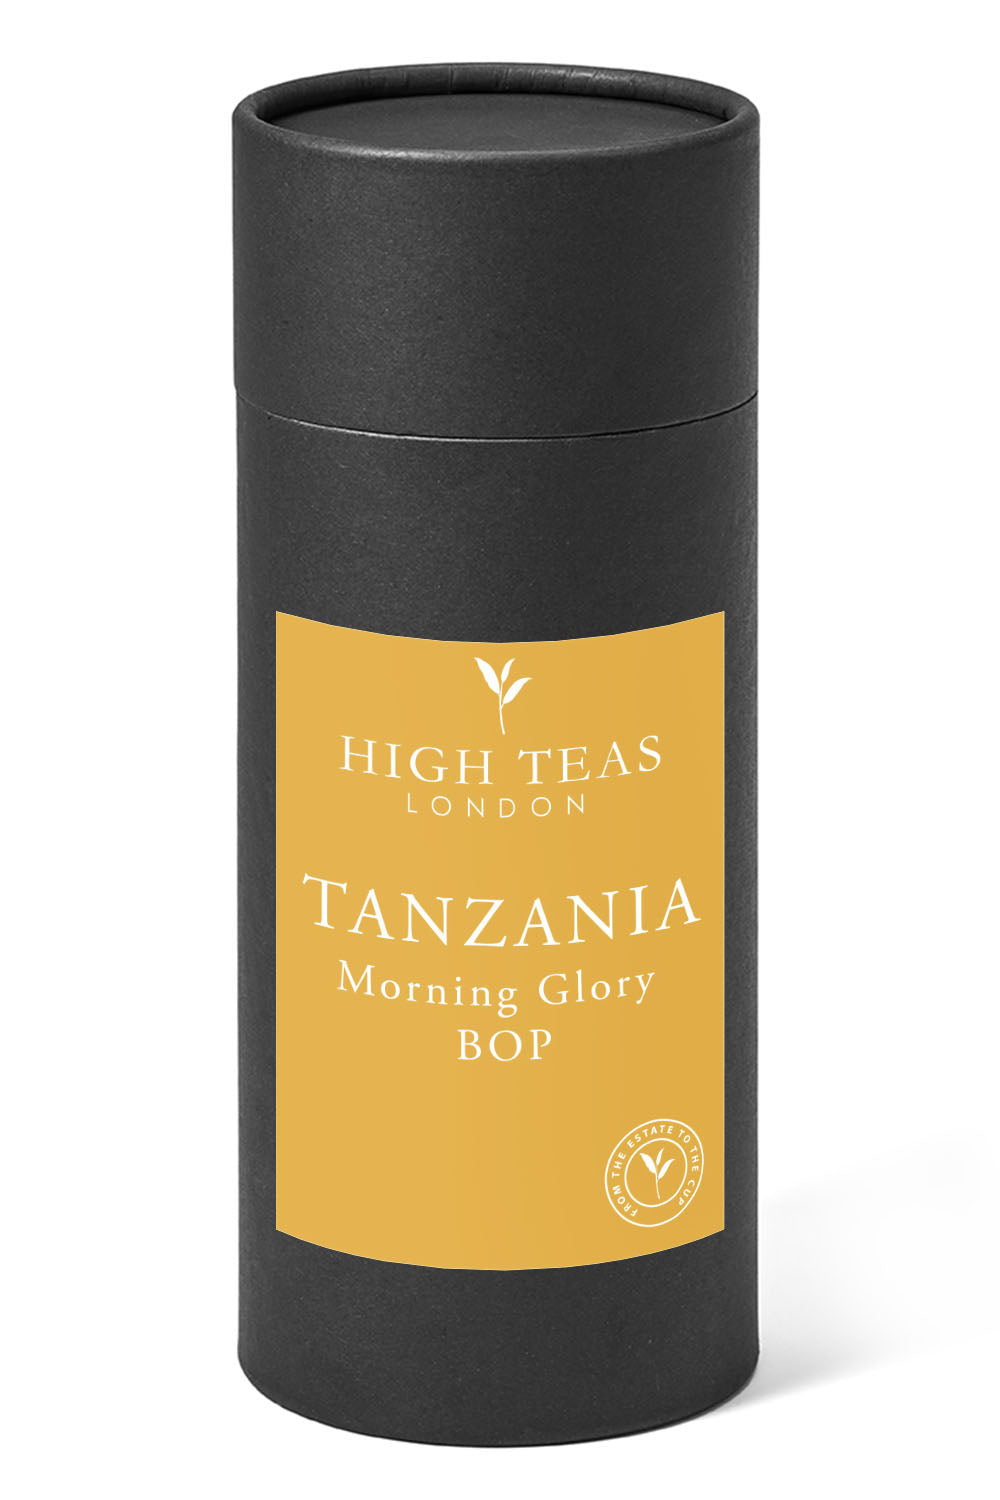 Tanzania BOP (CTC) - "Morning Glory"-150g gift-Loose Leaf Tea-High Teas